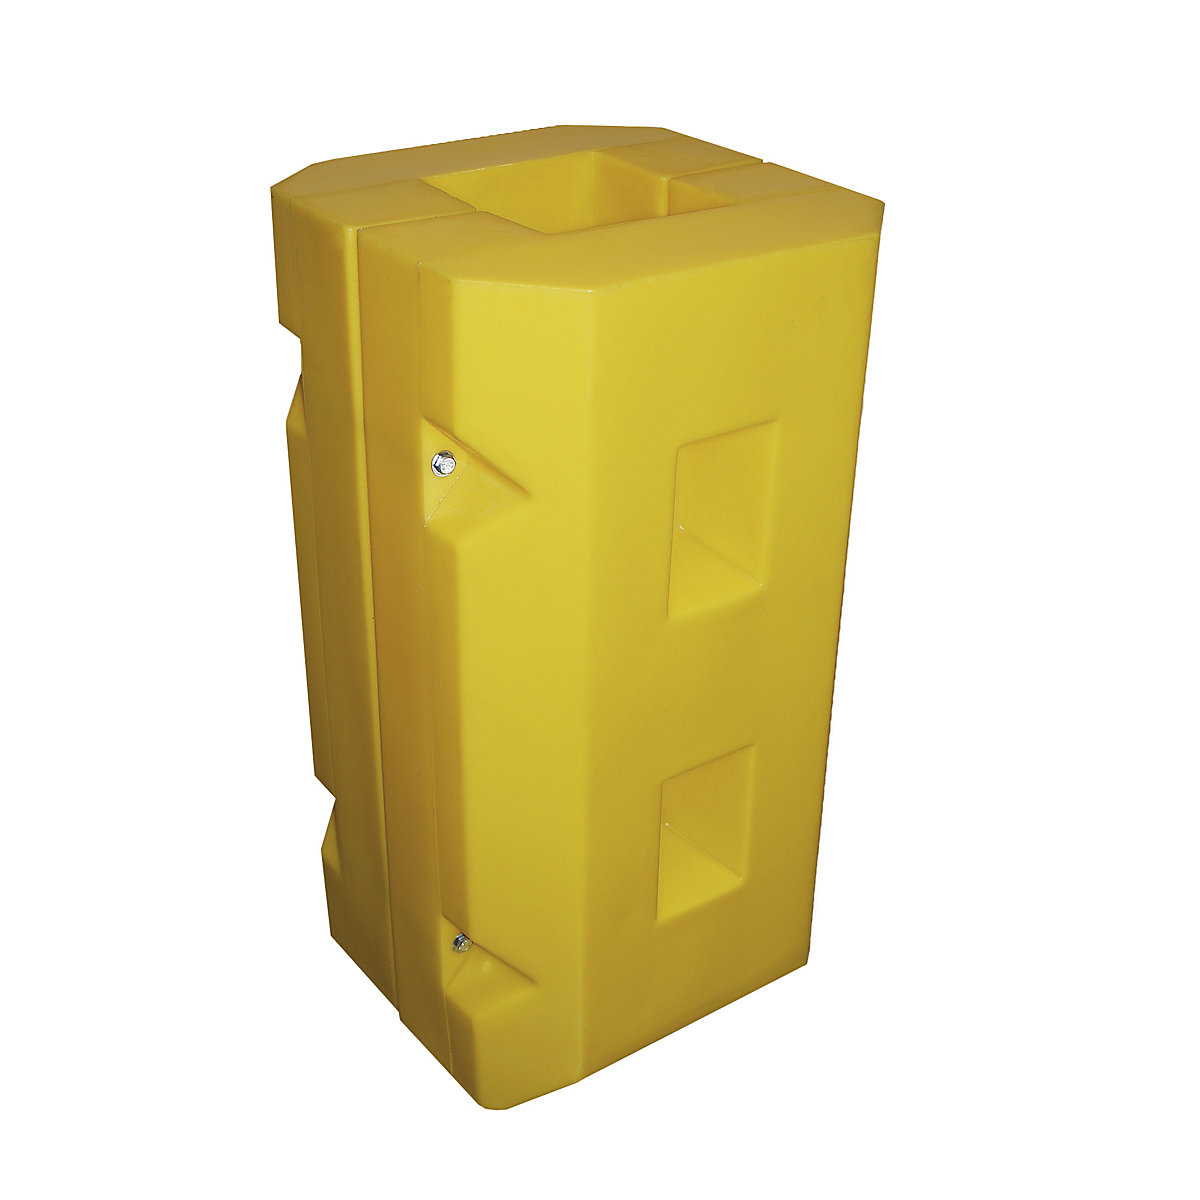 Zuil- en paalbeschermingen, van polyethyleen, geel, l x b x h = 515 x 450 x 945 mm, binnenafmetingen 215 x 235 mm-5